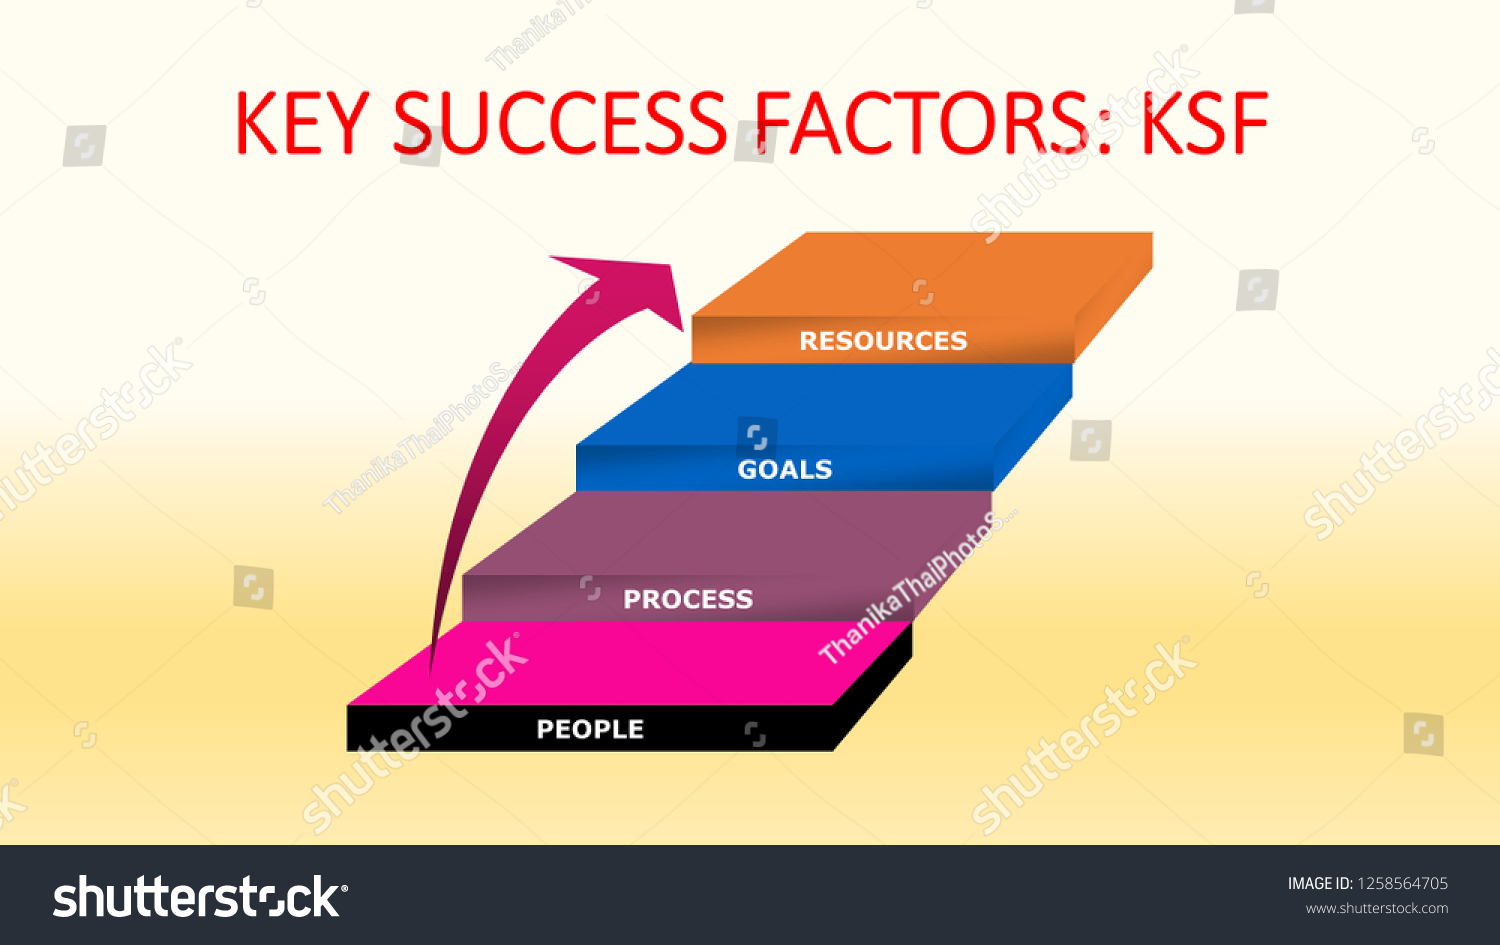 Key Success Fators Ksf Definition People のイラスト素材